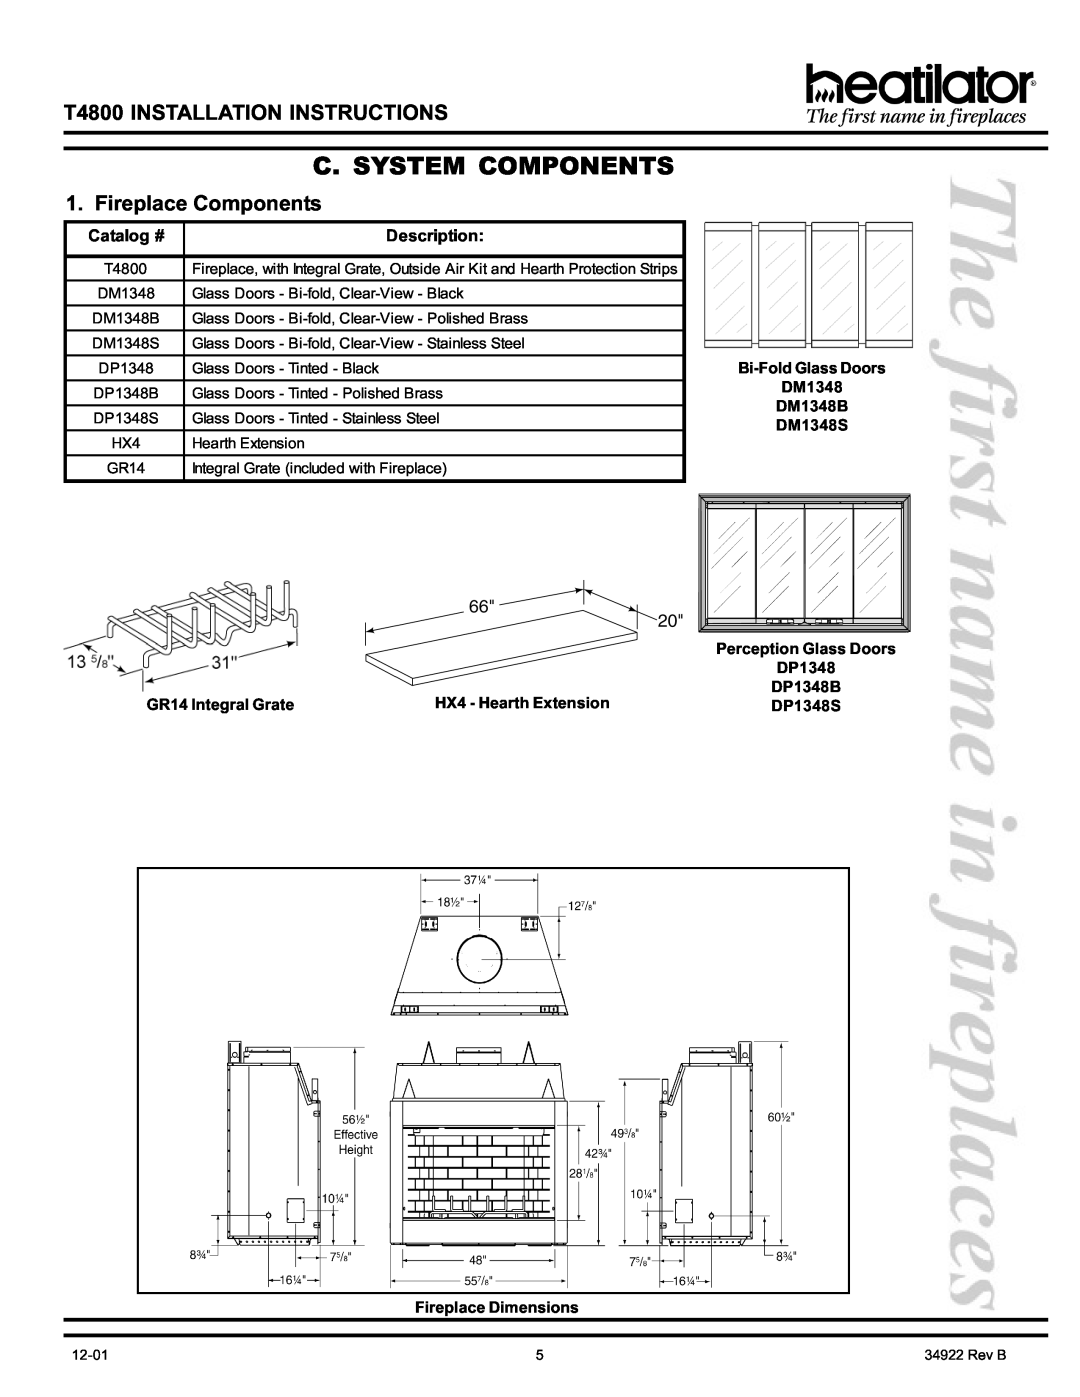 Heatiator T4800 manual C. System Components, Fireplace Components, Catalog #, Description, Bi-FoldGlass Doors, DM1348B 